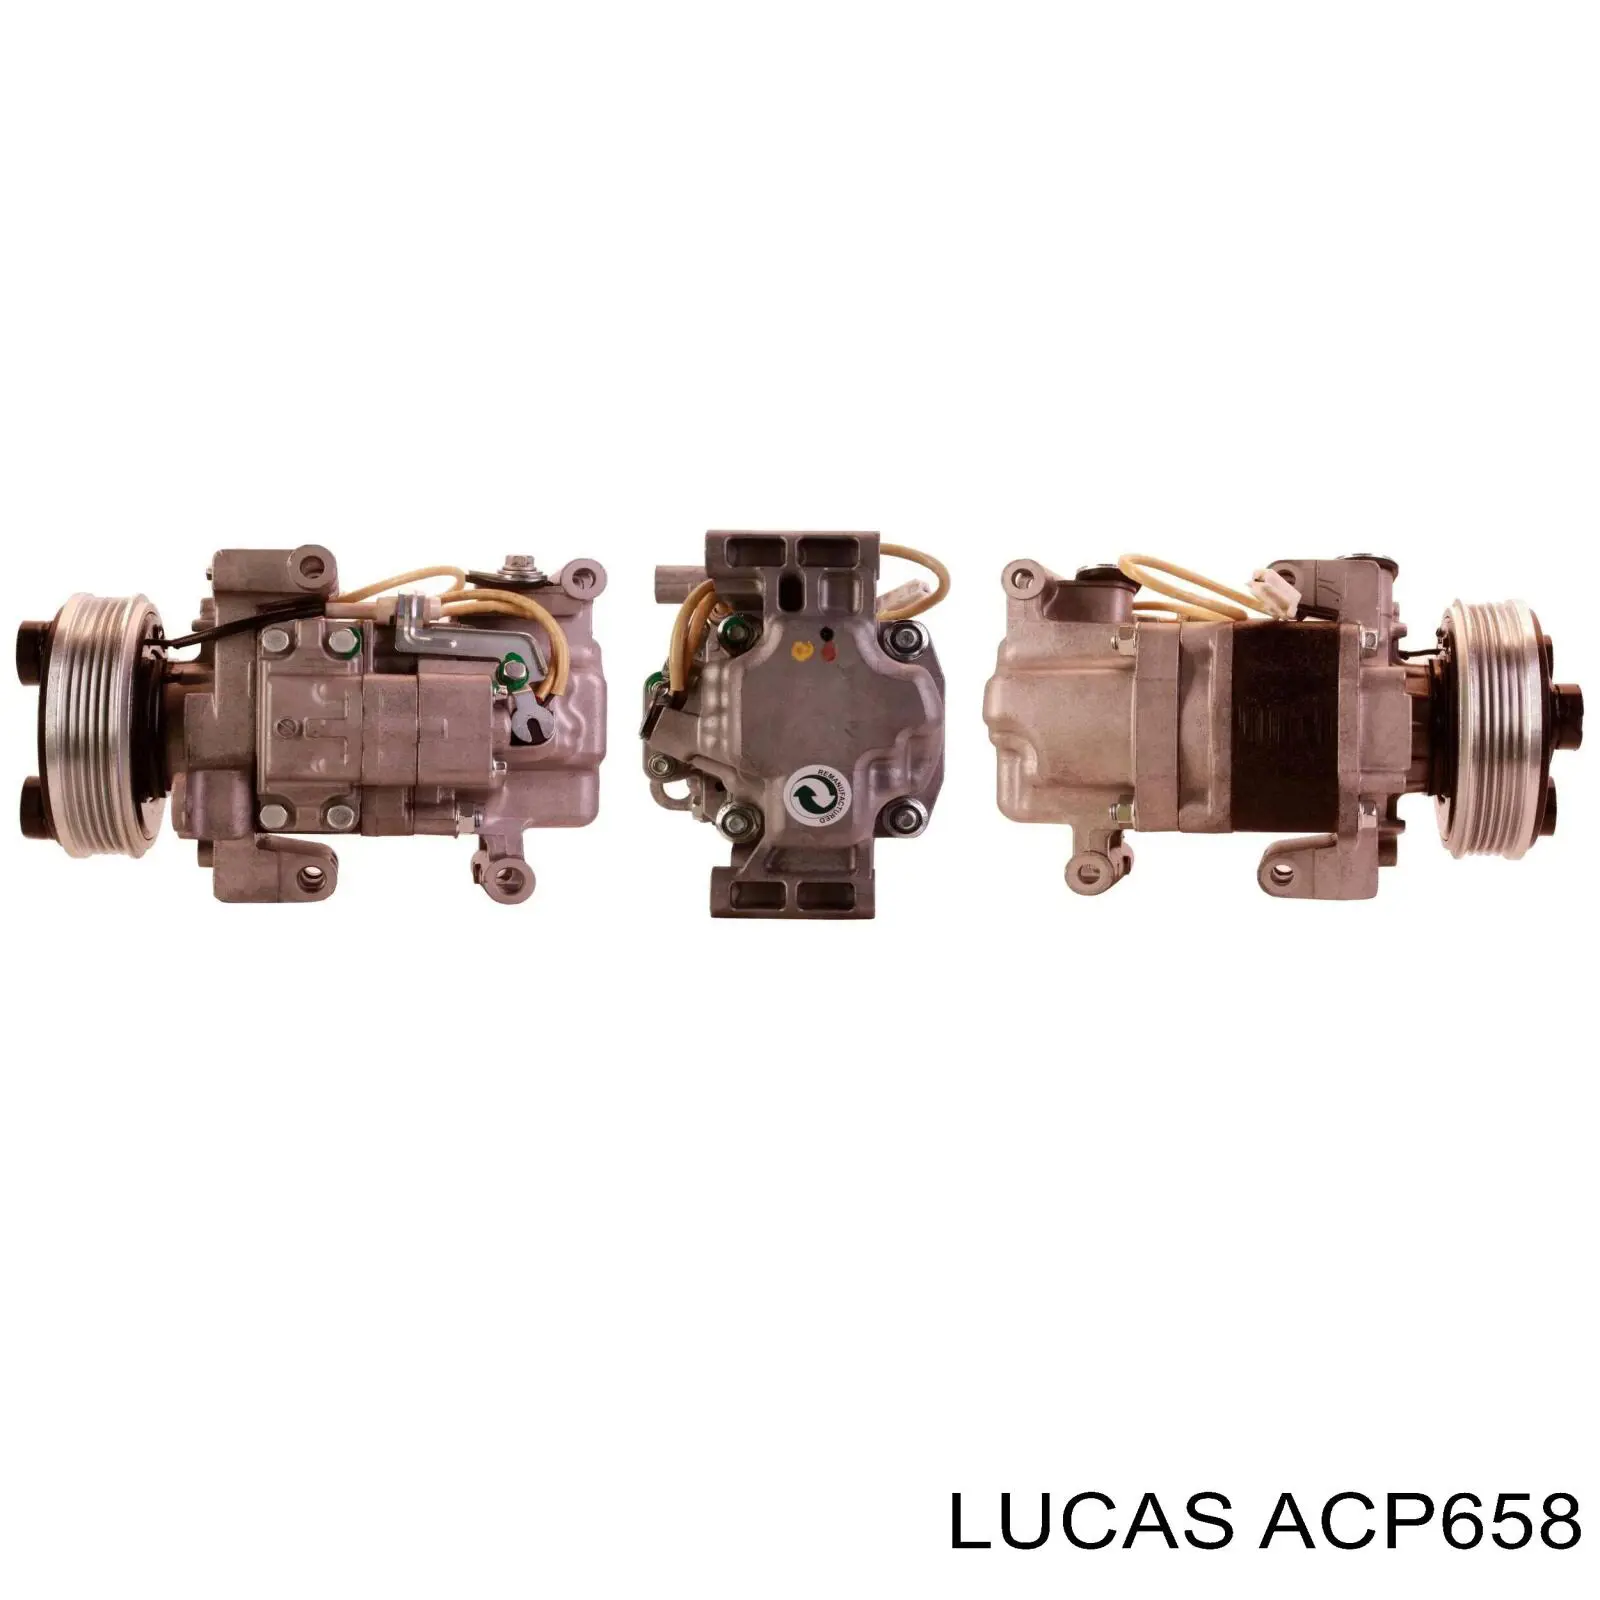 Compresor de aire acondicionado ACP658 Lucas